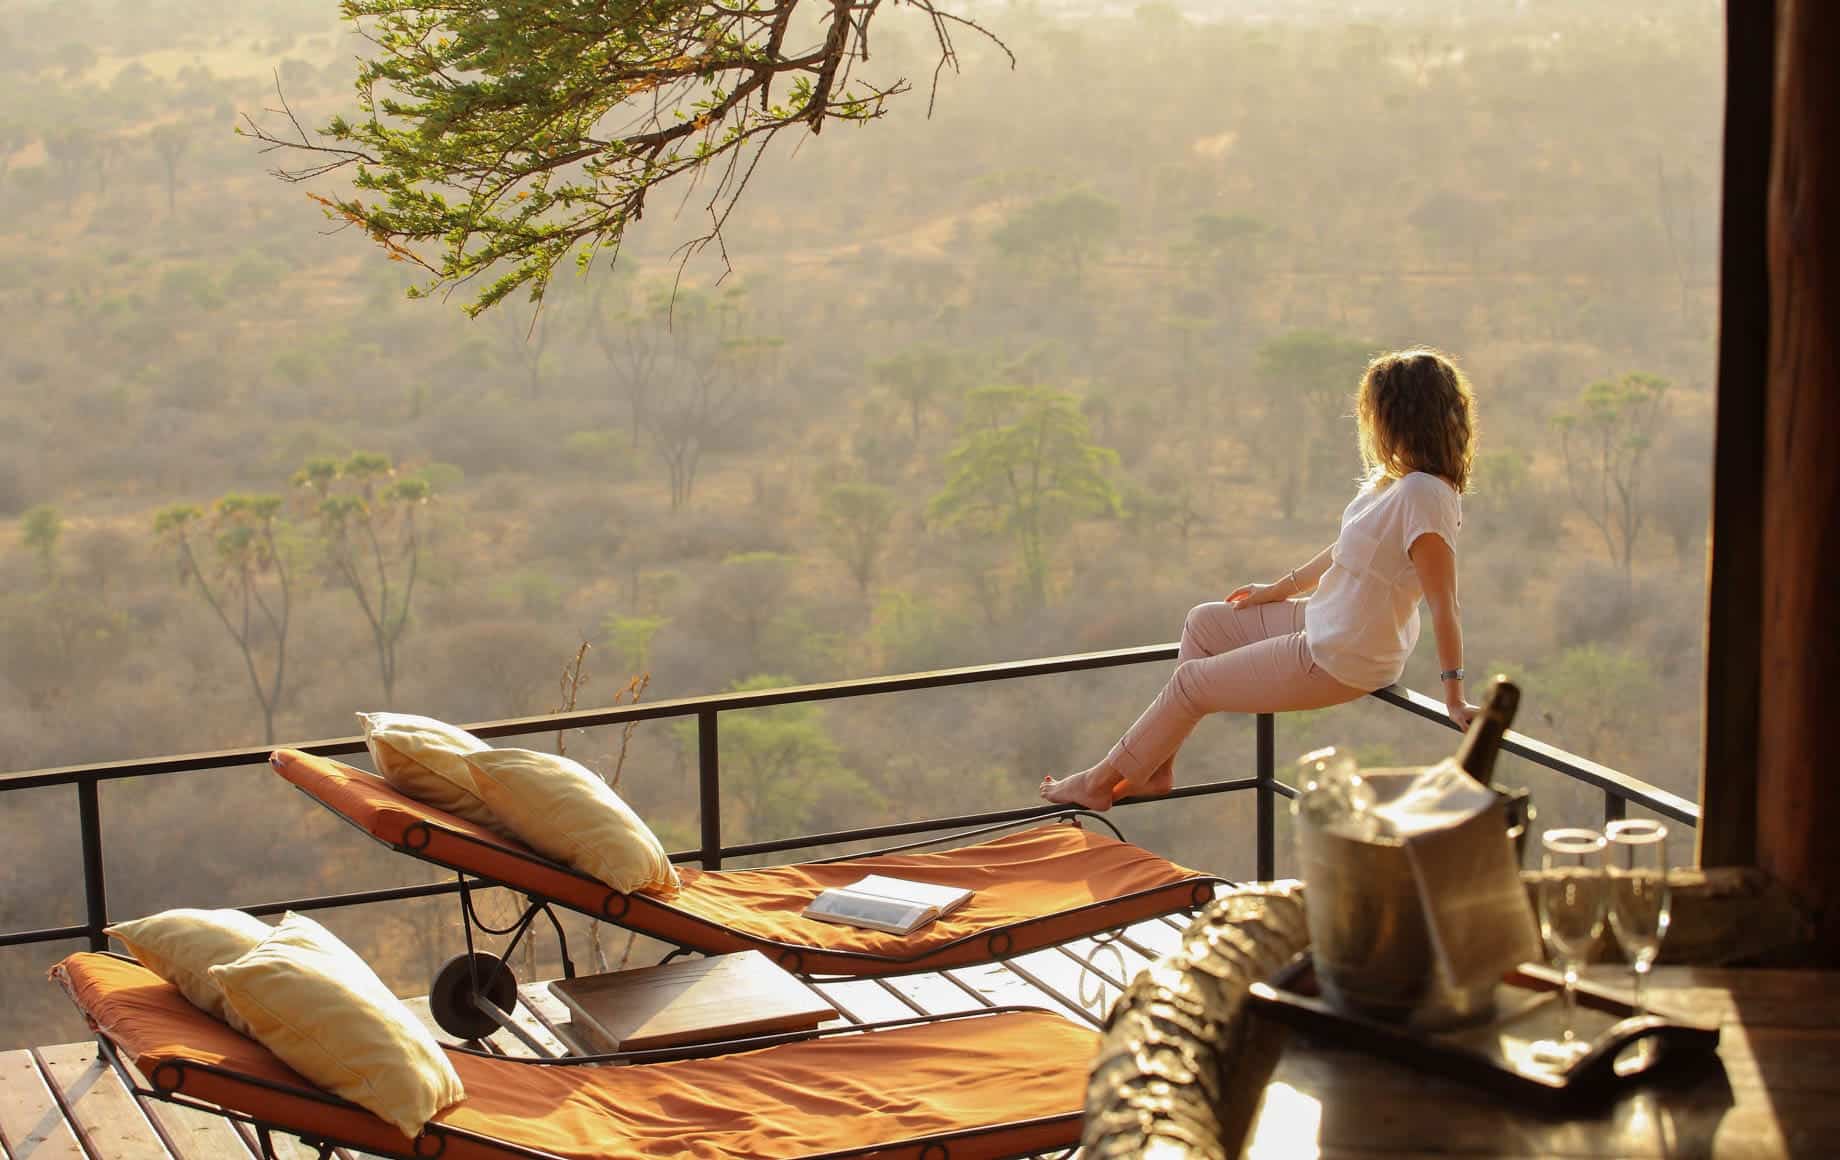 Peaceful view at Meru National Park, Kenya